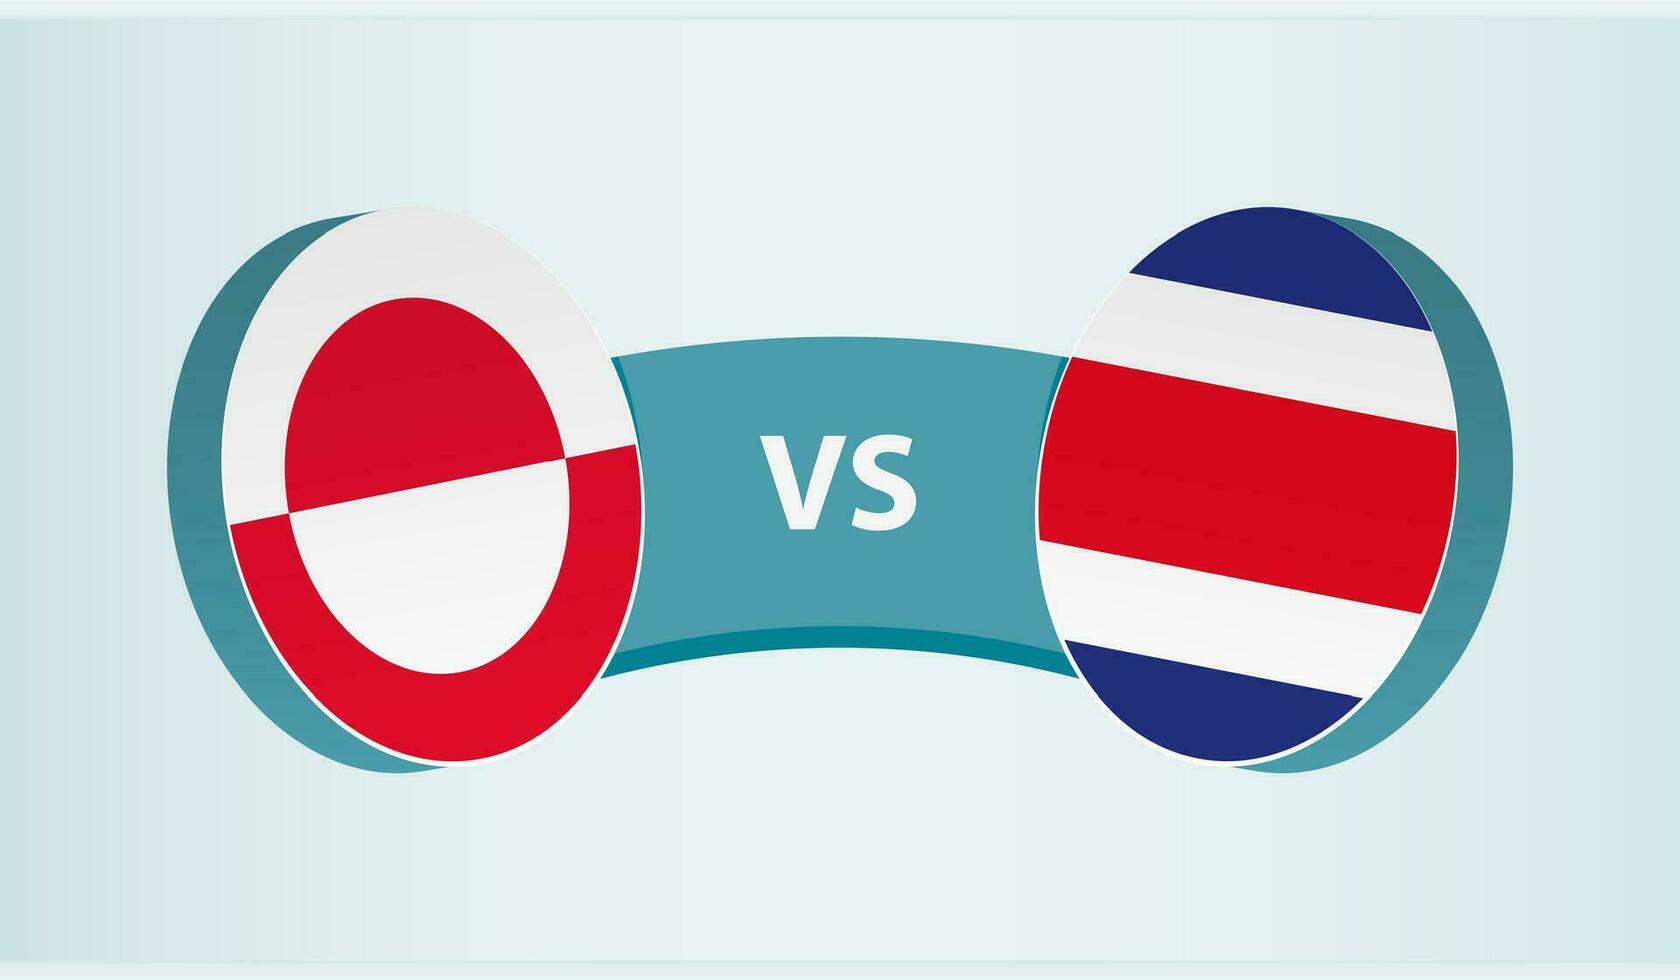 Groenlândia versus costa rica, equipe Esportes concorrência conceito. vetor